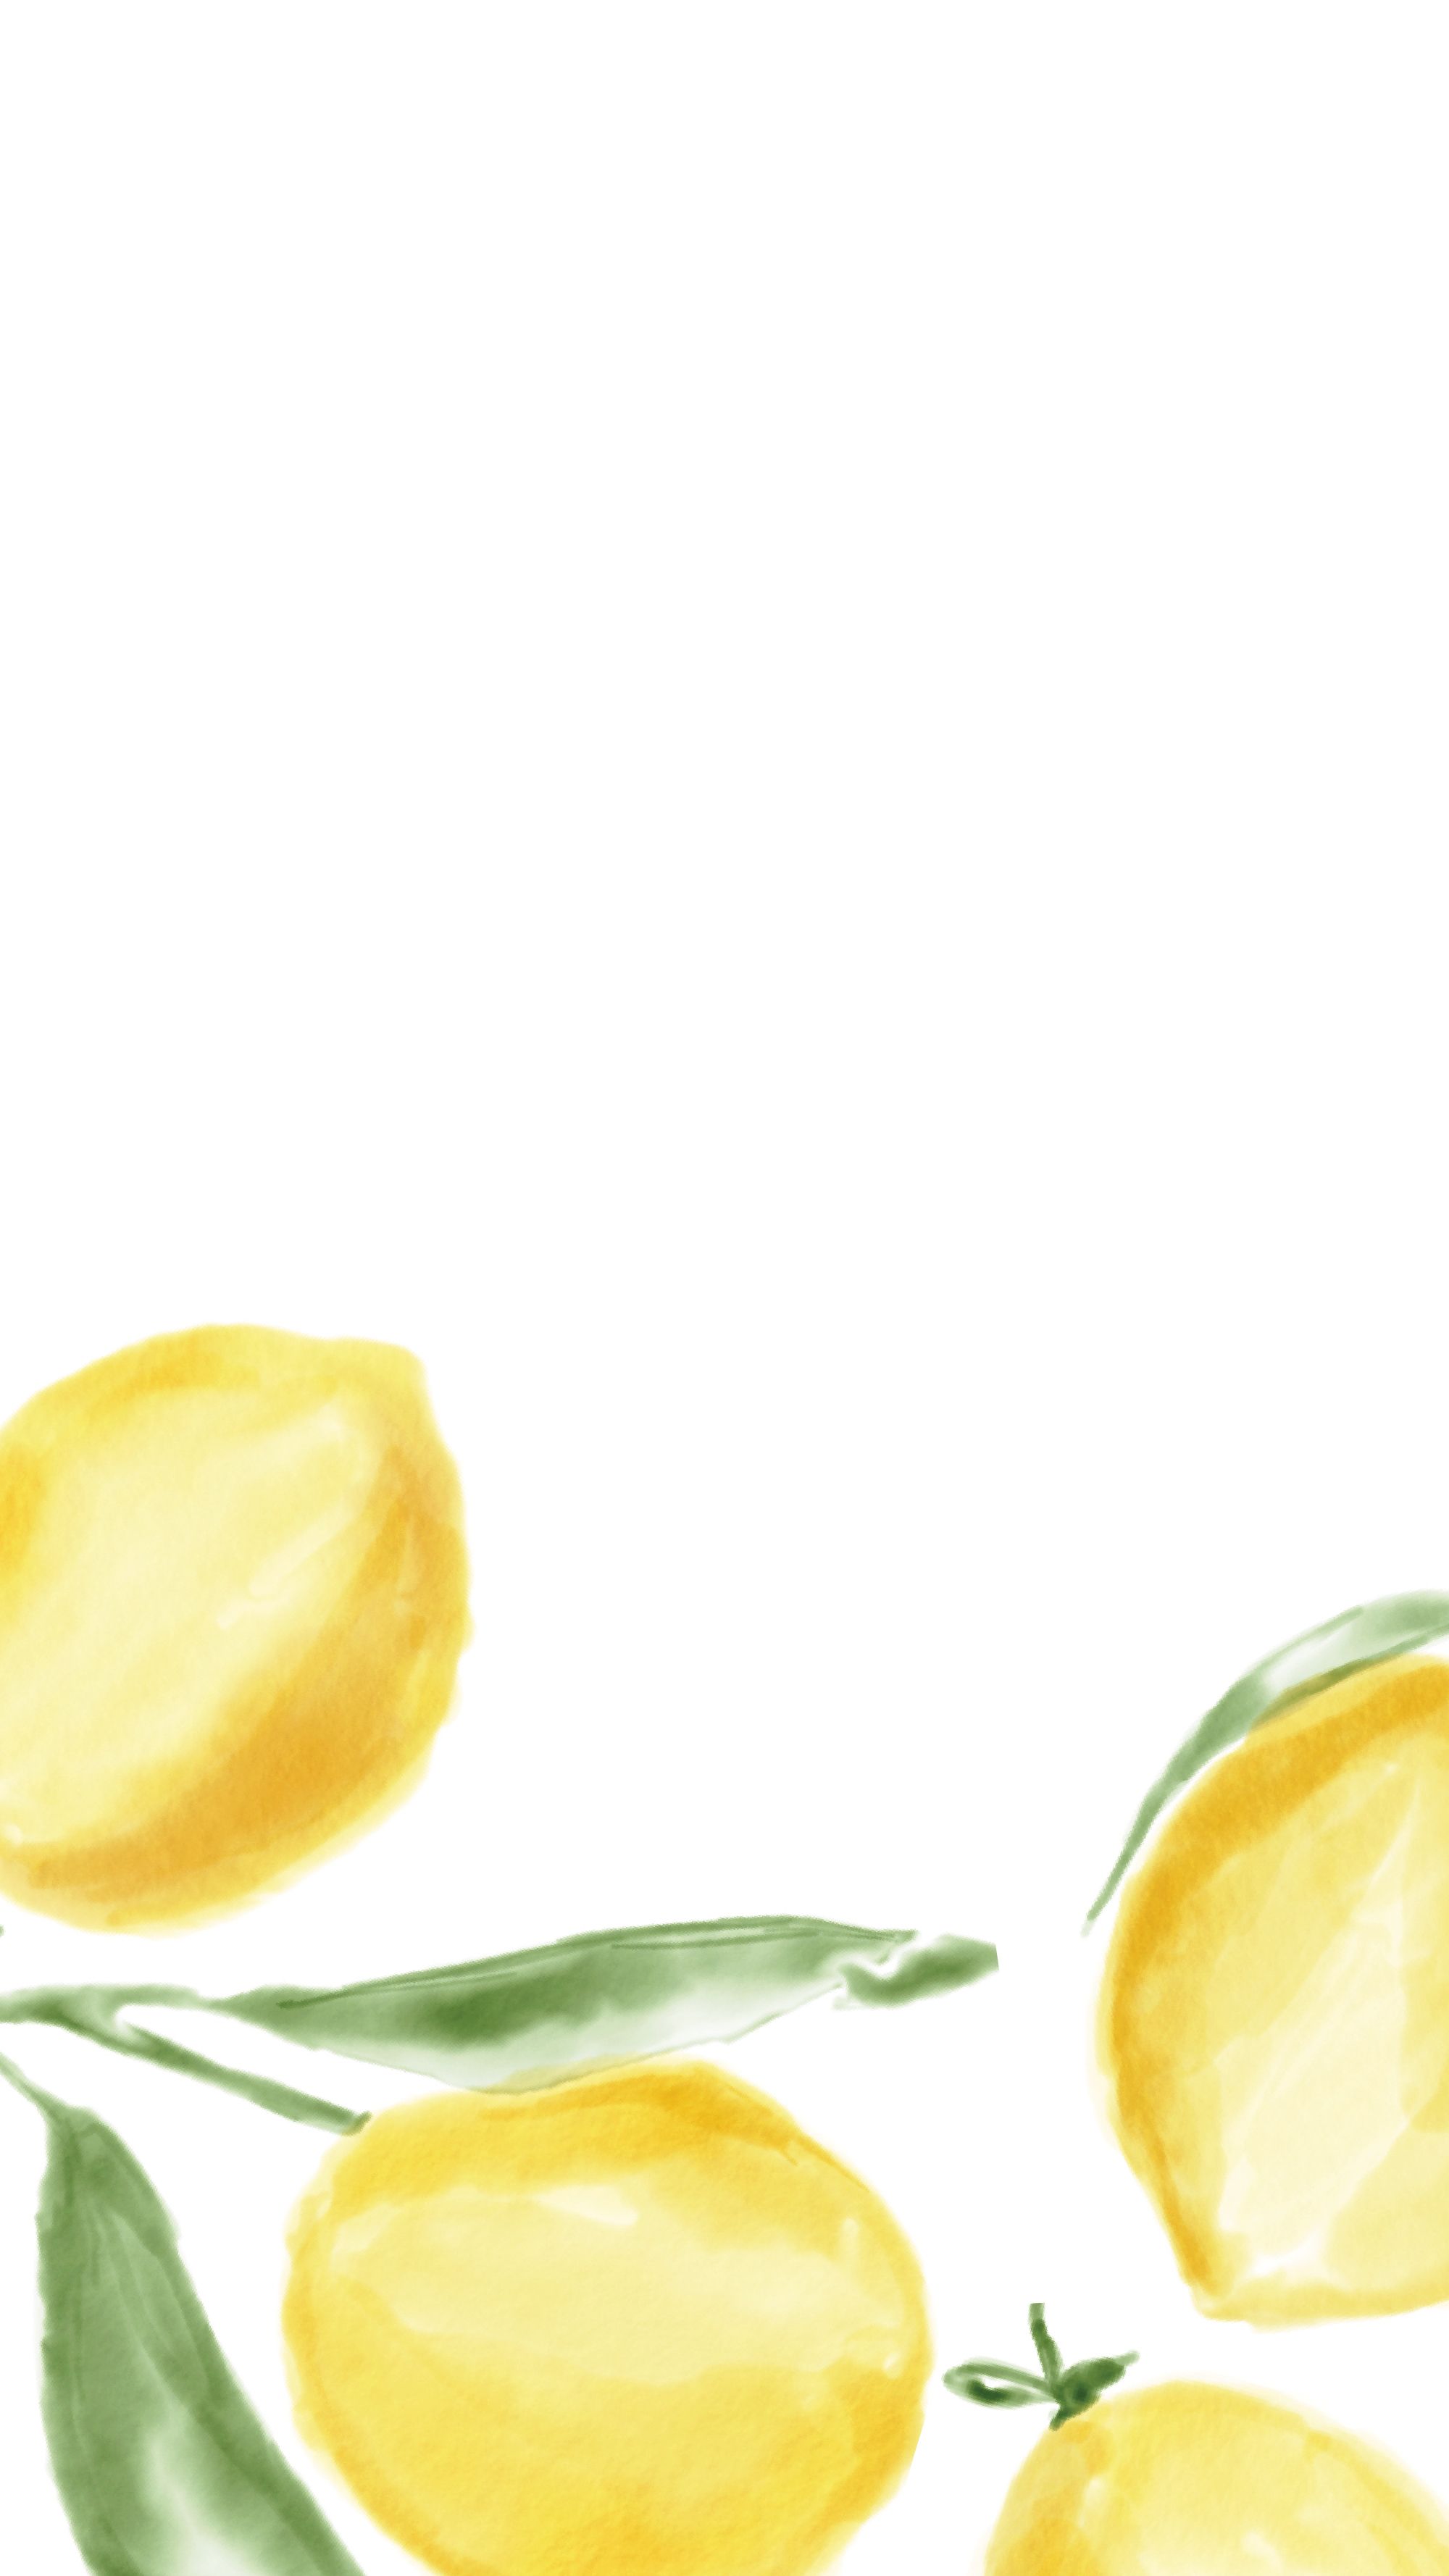 A watercolor painting of lemons and leaves - Lemon